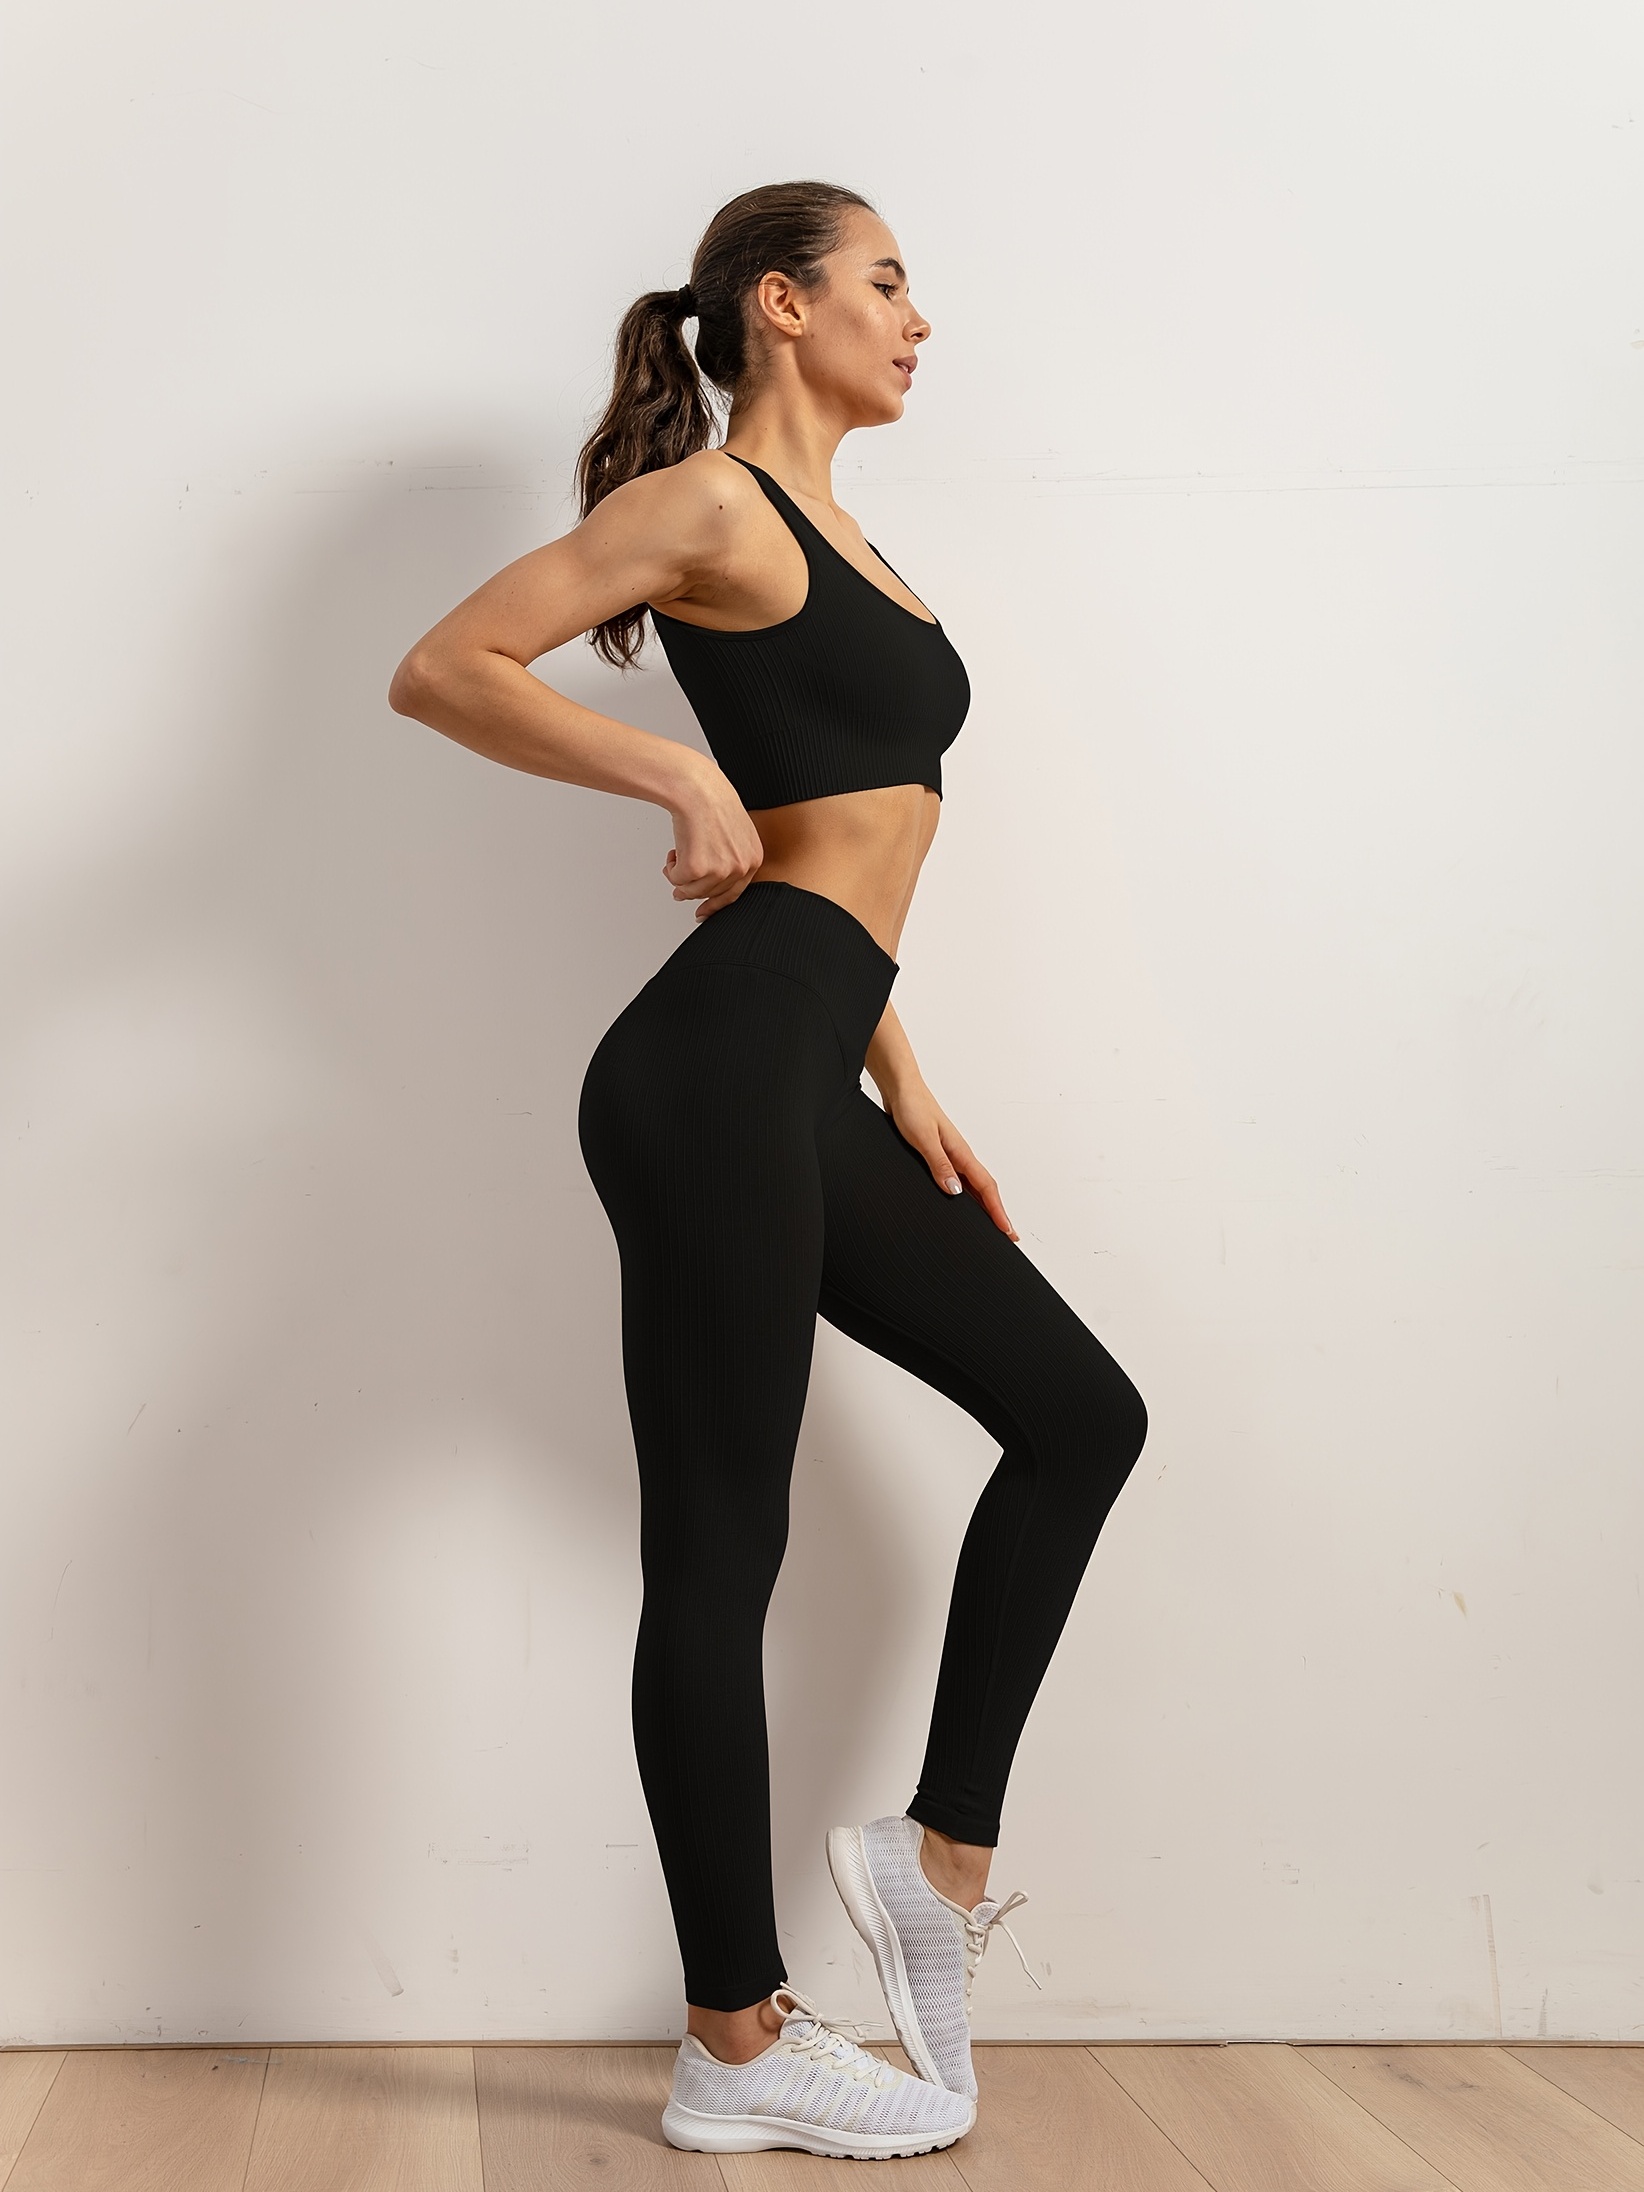 Black Women Sport Yoga Fitness Bottoms Leggings Athletic Pants Top Bra Set